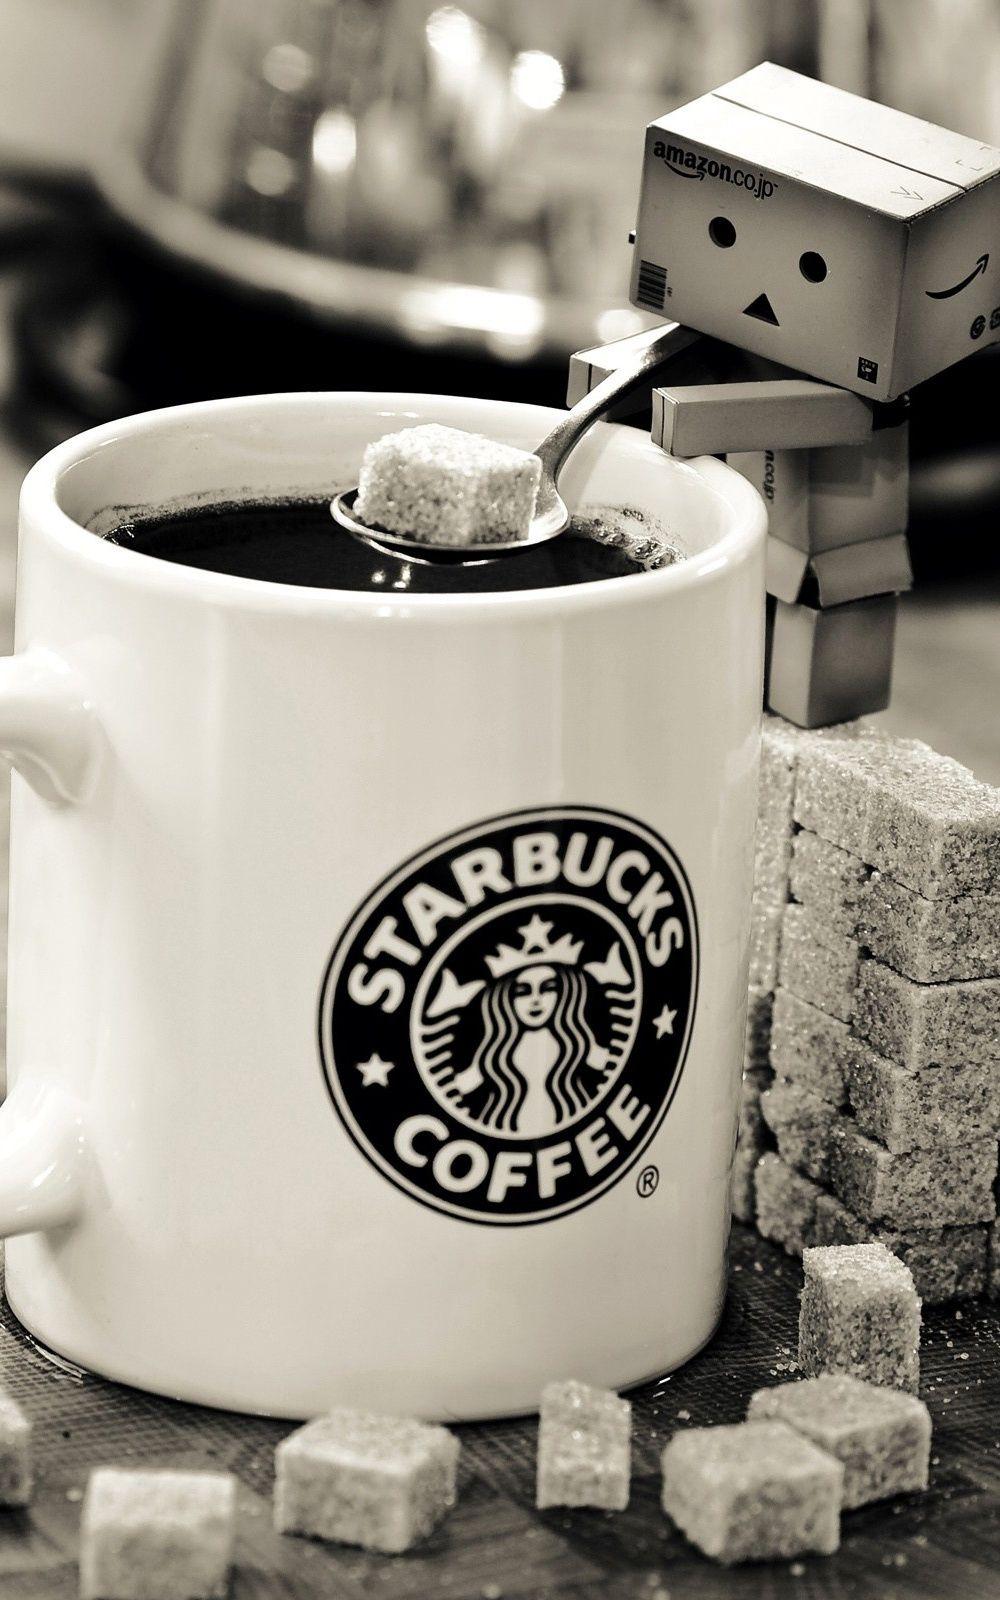 Starbucks Coffee Danboard Sugar Android Wallpaper free download